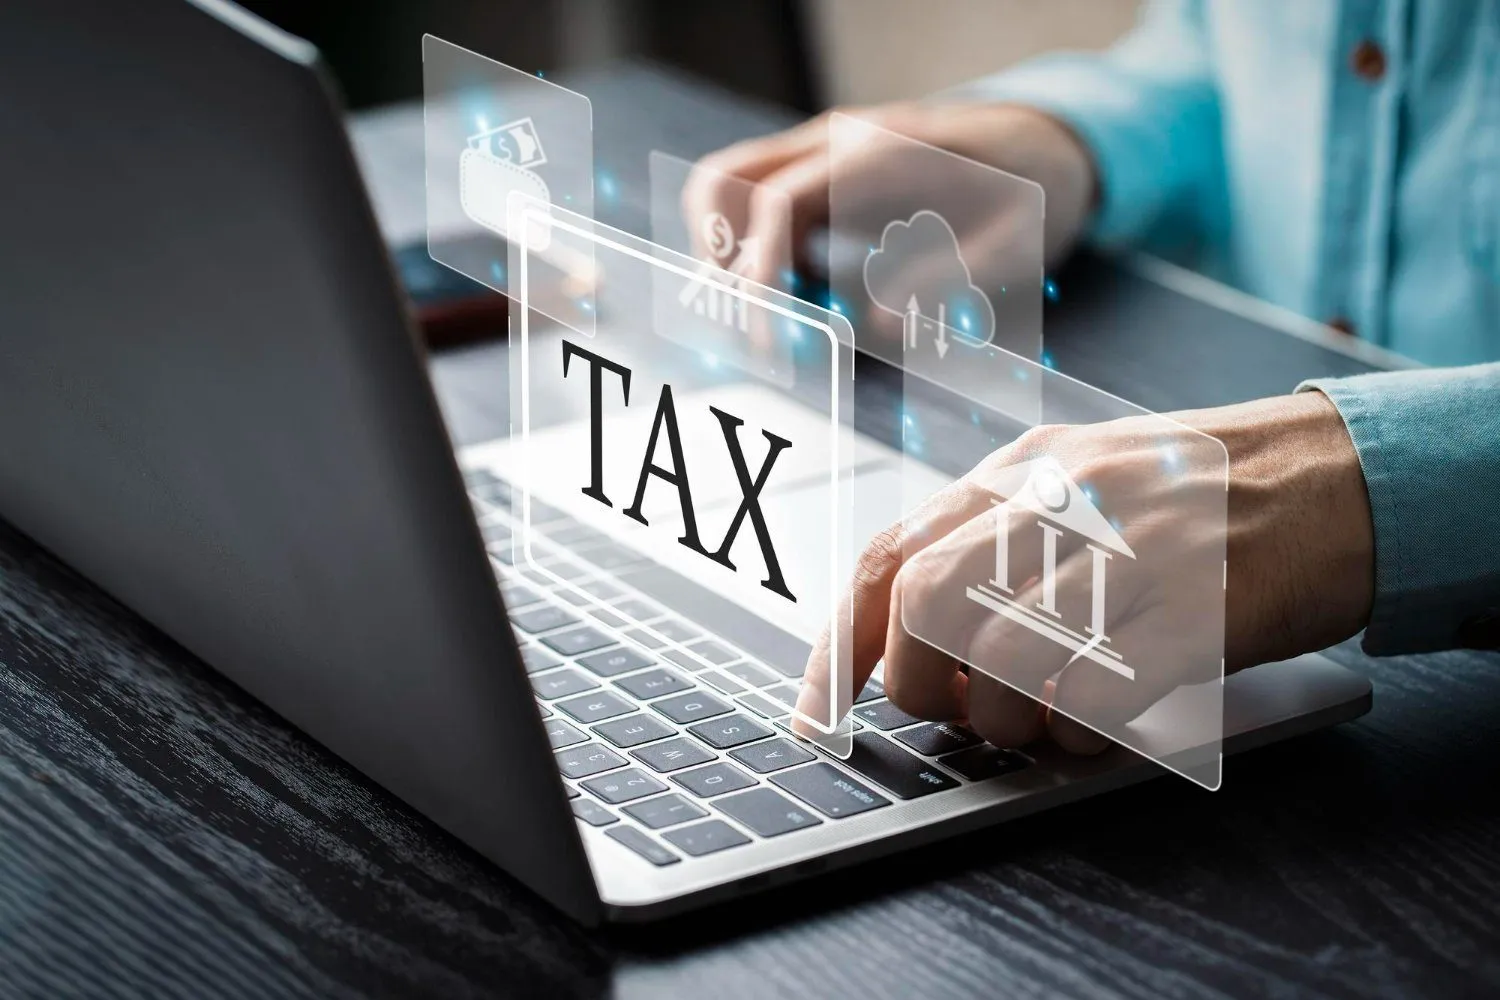 Tax Software vs Accountant